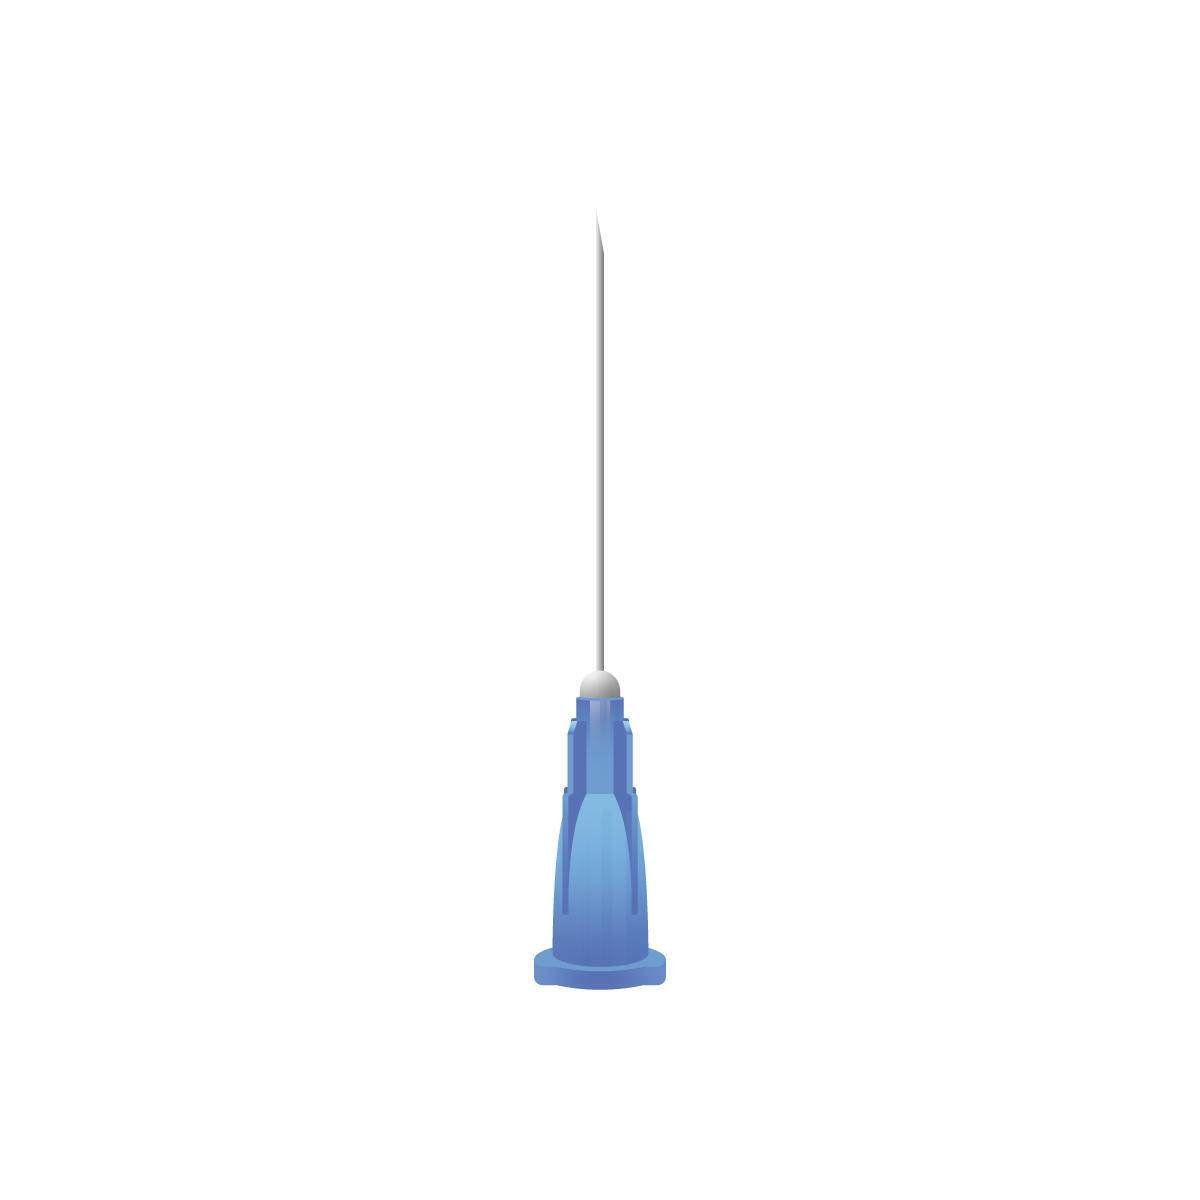 23g Blue 1.25 inch BD Microlance Needles - UKMEDI